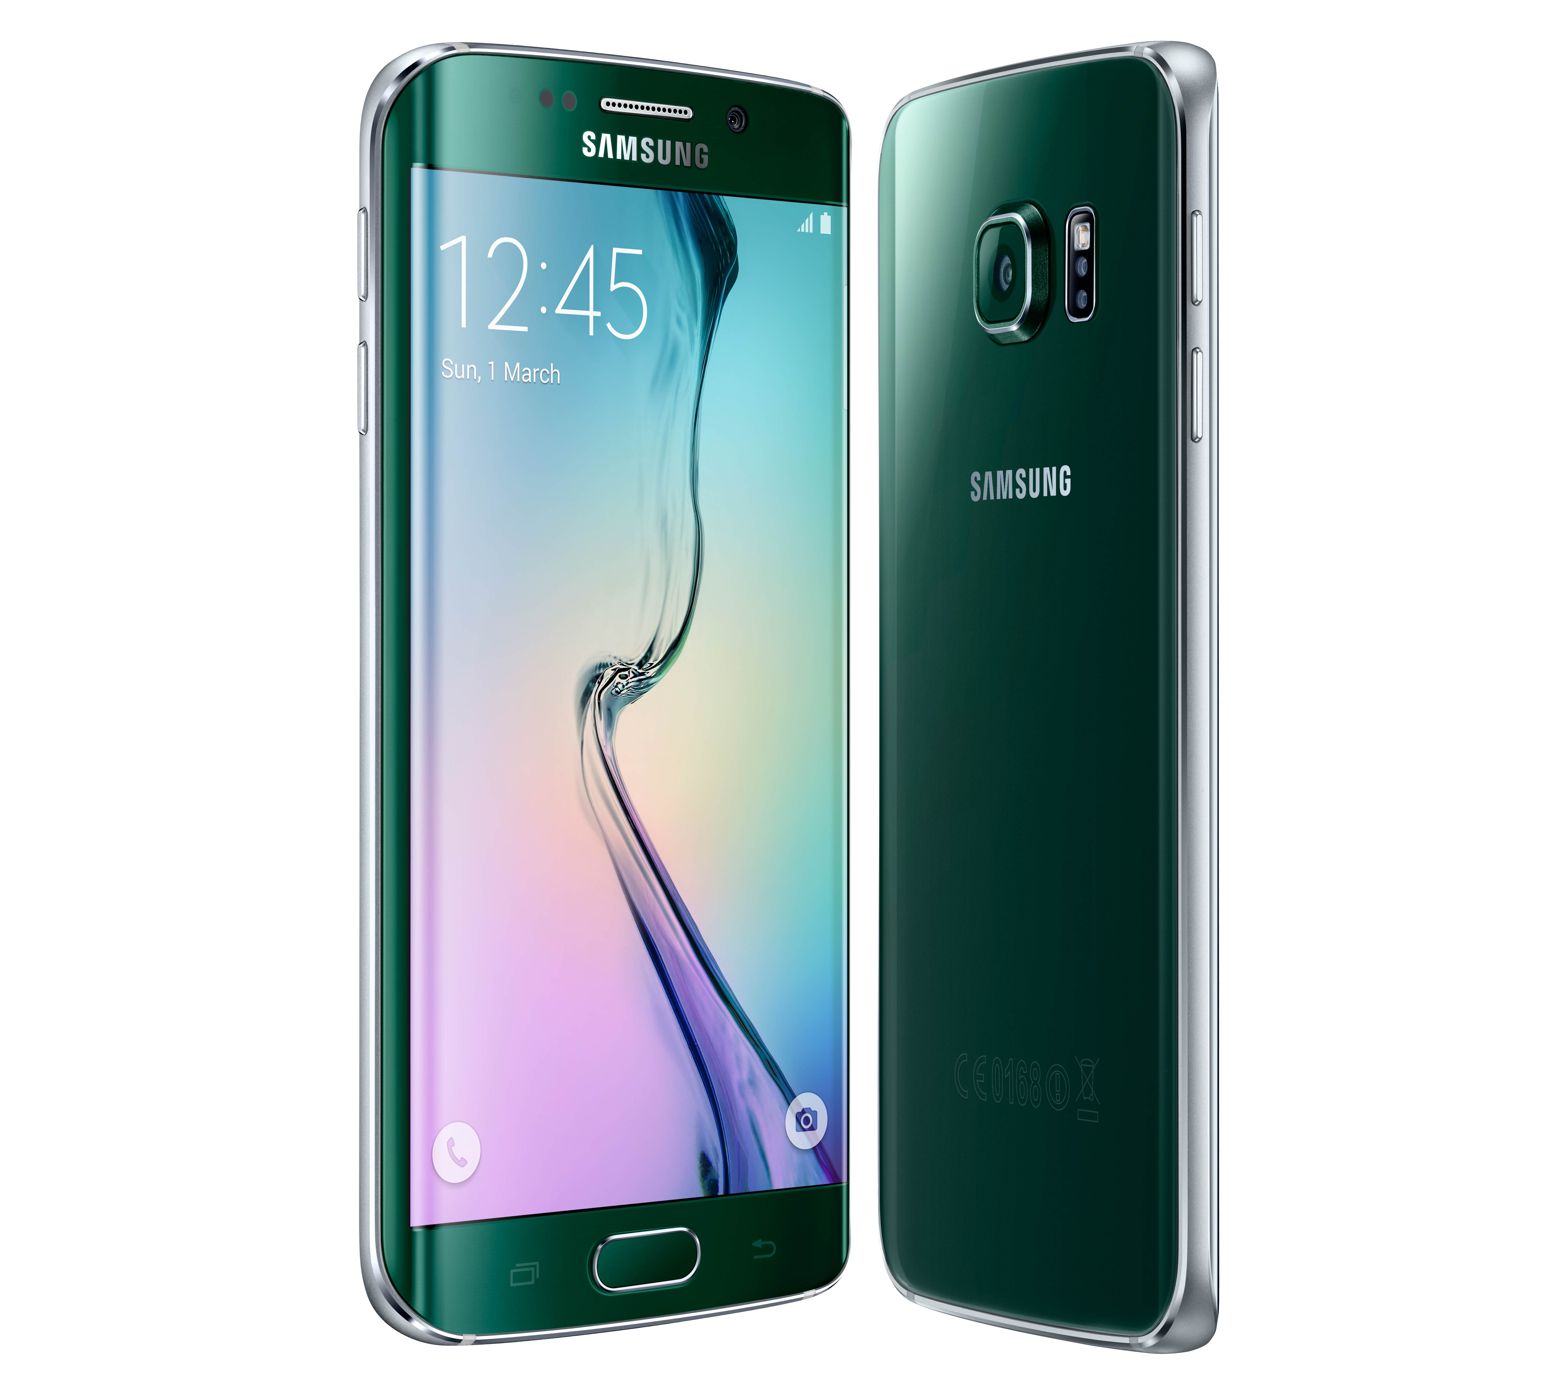 Samsung-Galaxy-S6-edge-Green-Emerald..jpg